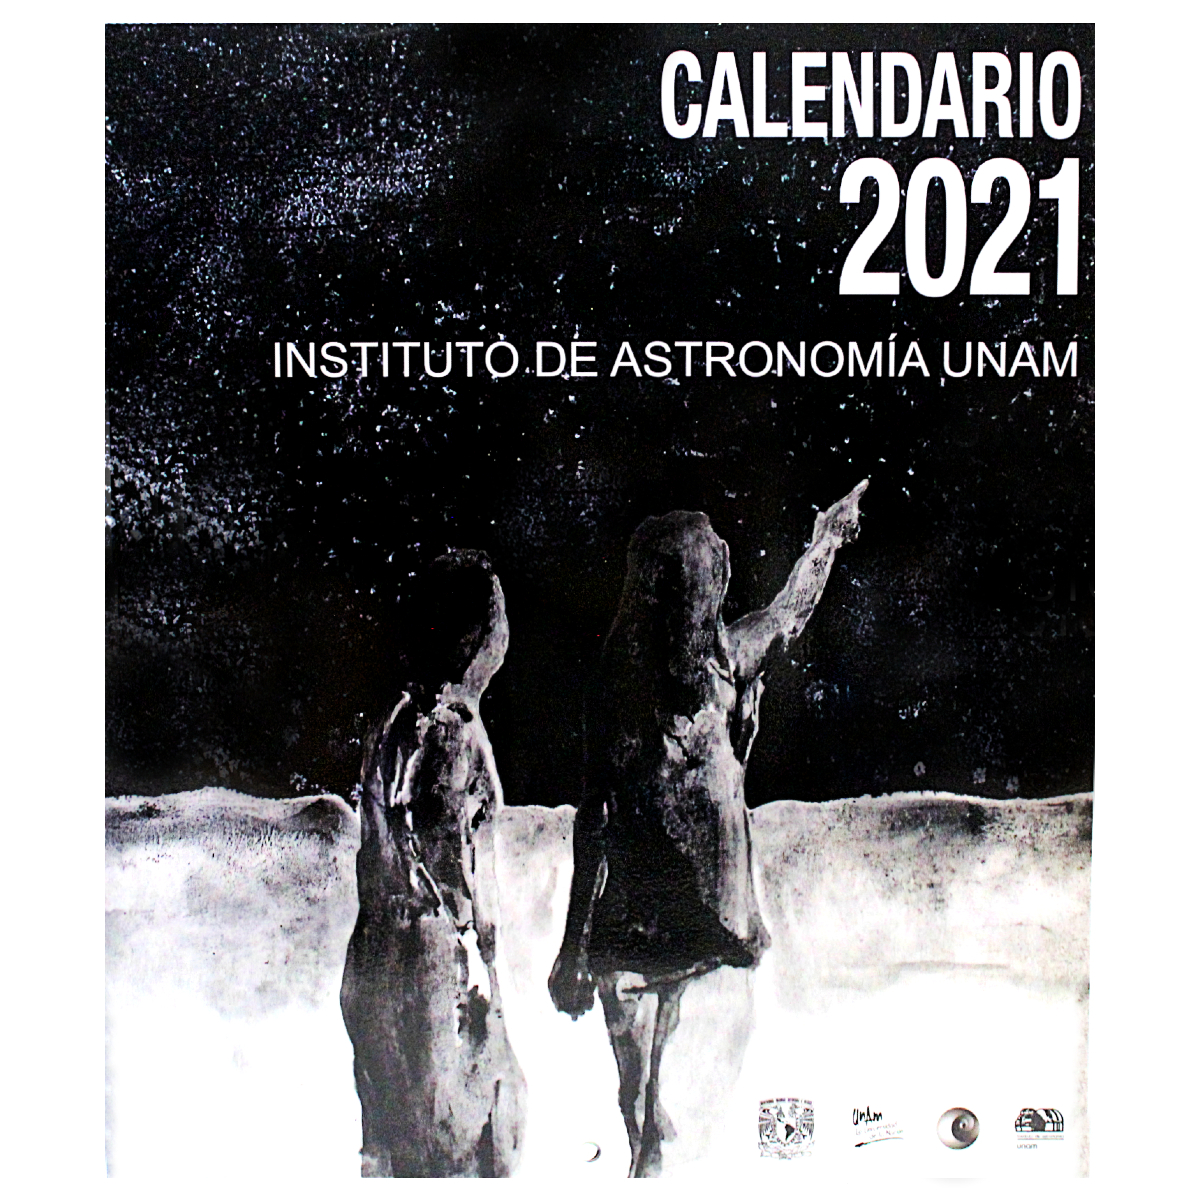 CALENDARIO DEL INSTITUTO DE ASTRONOMIA 2021